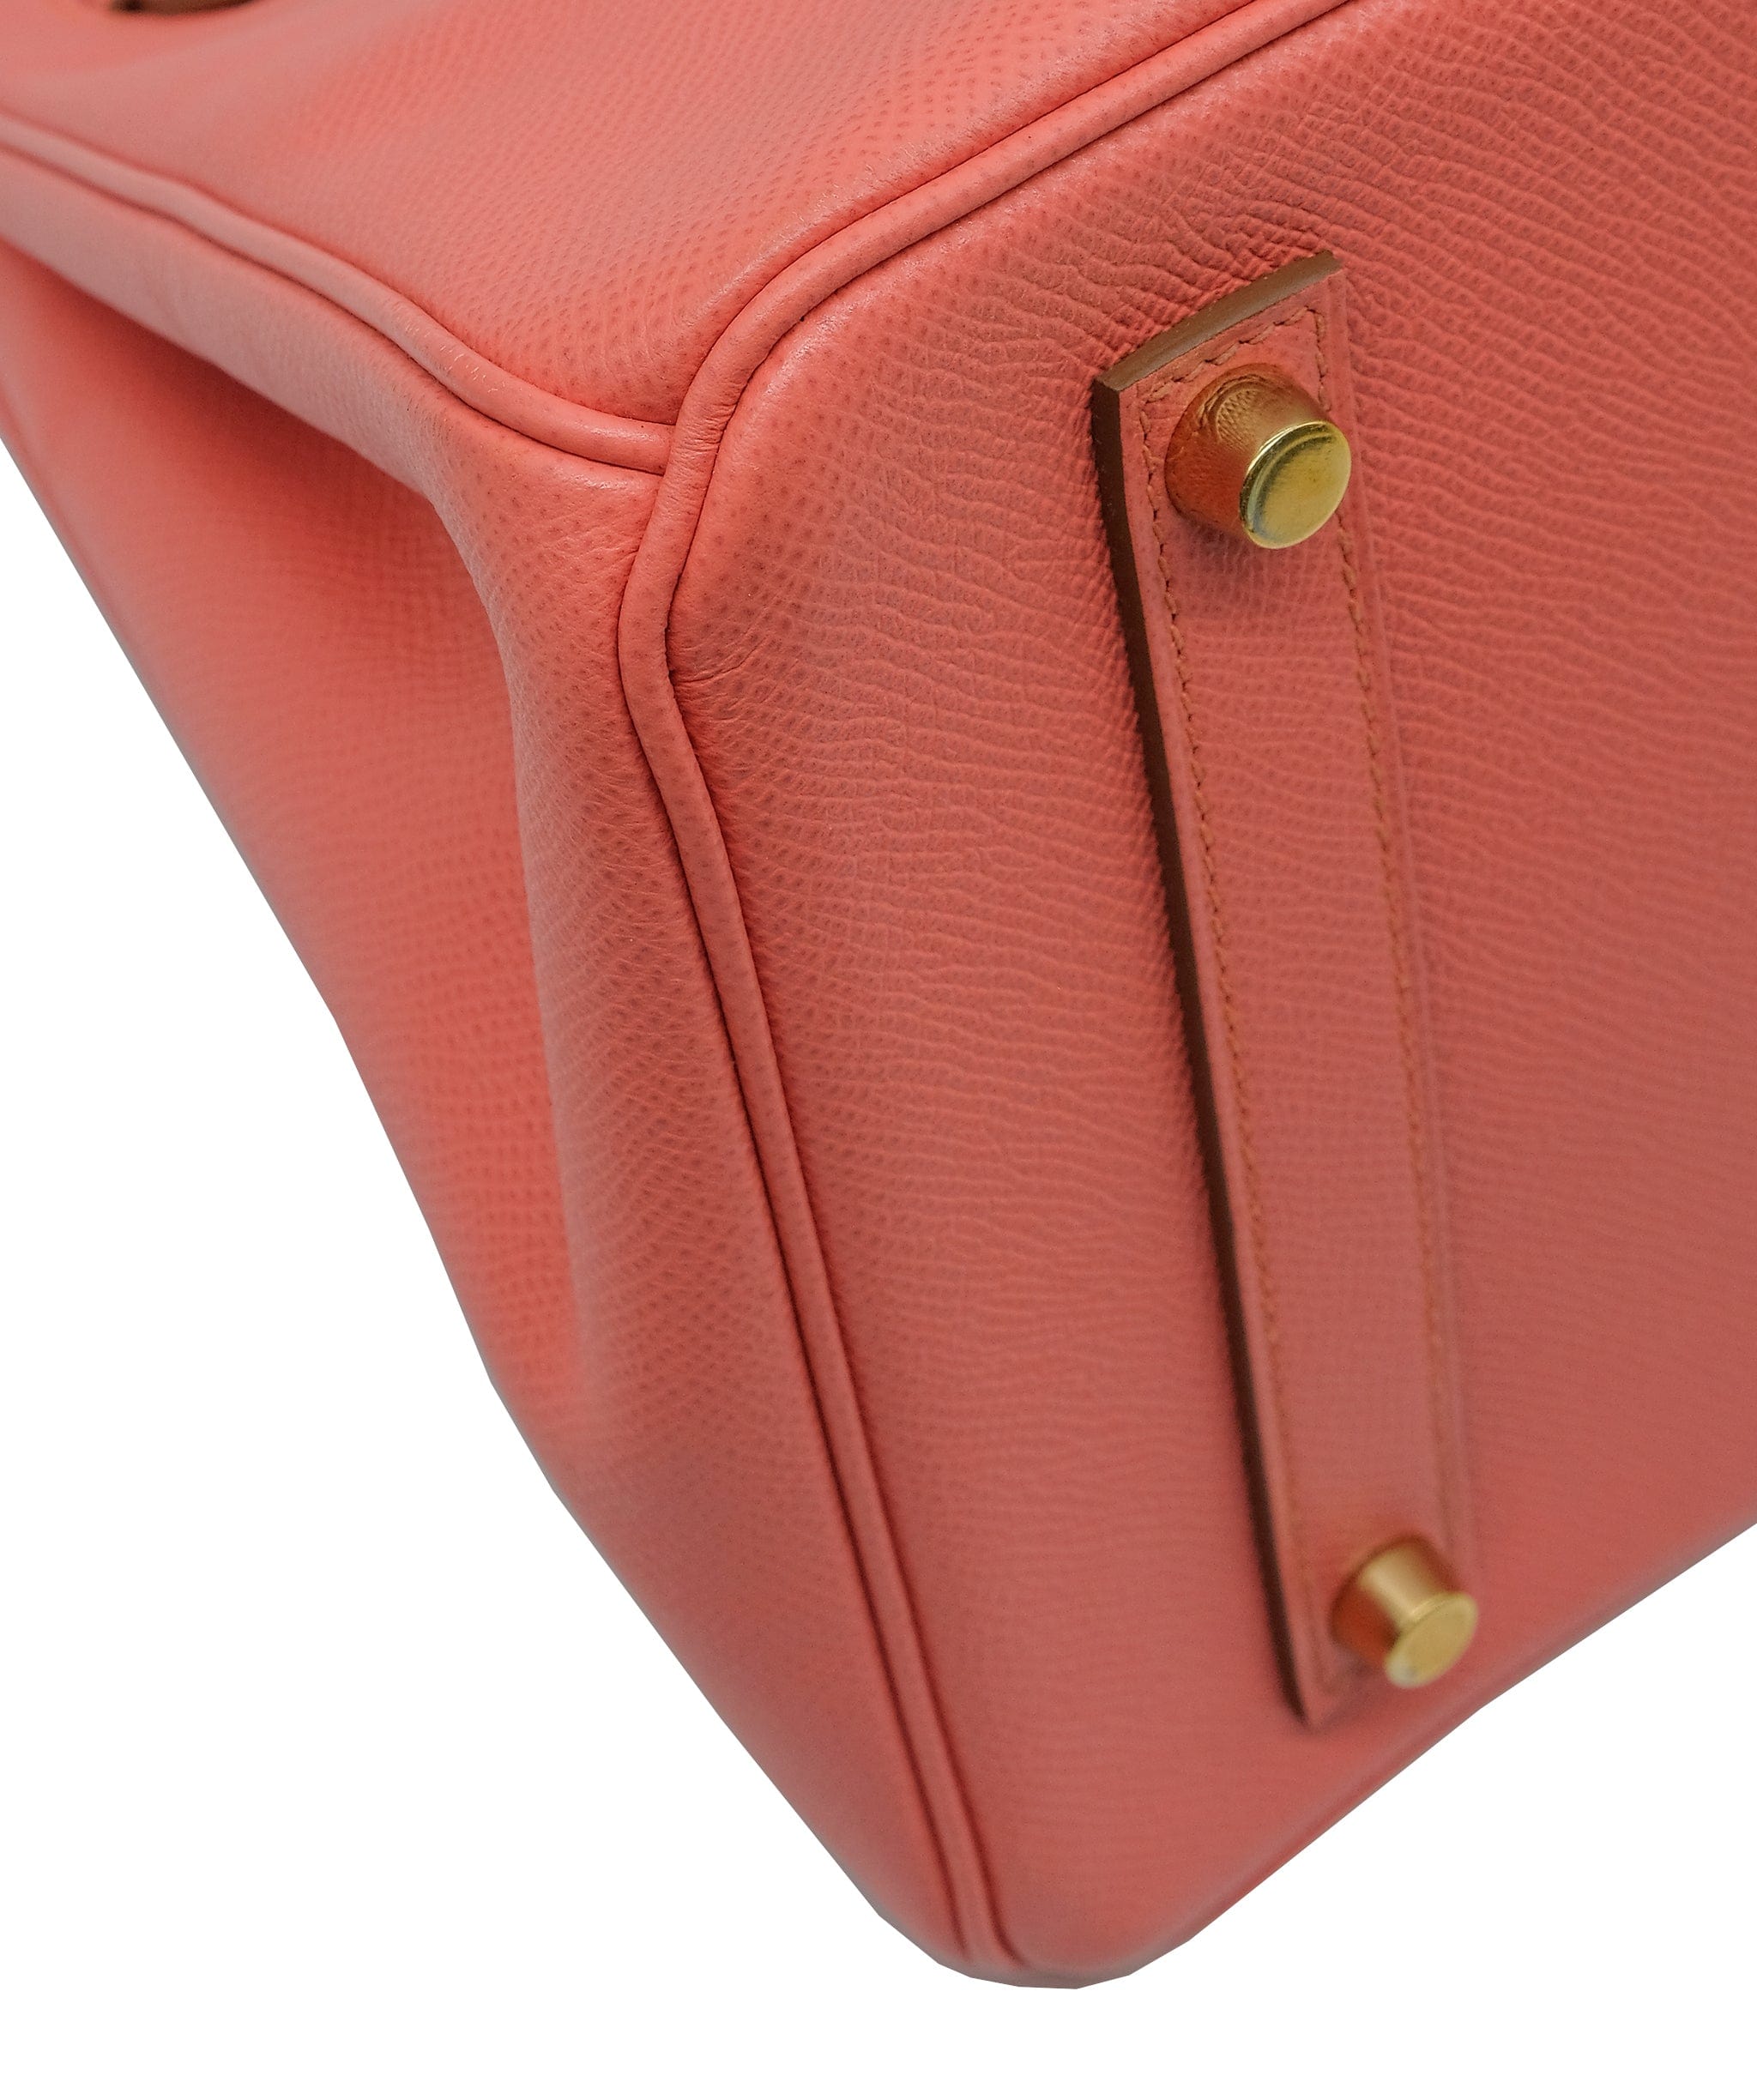 Hermès Hermes Birkin 35 Flamingo GHW w/ Padlock & Key / Clochette, Dust bag RJC3343